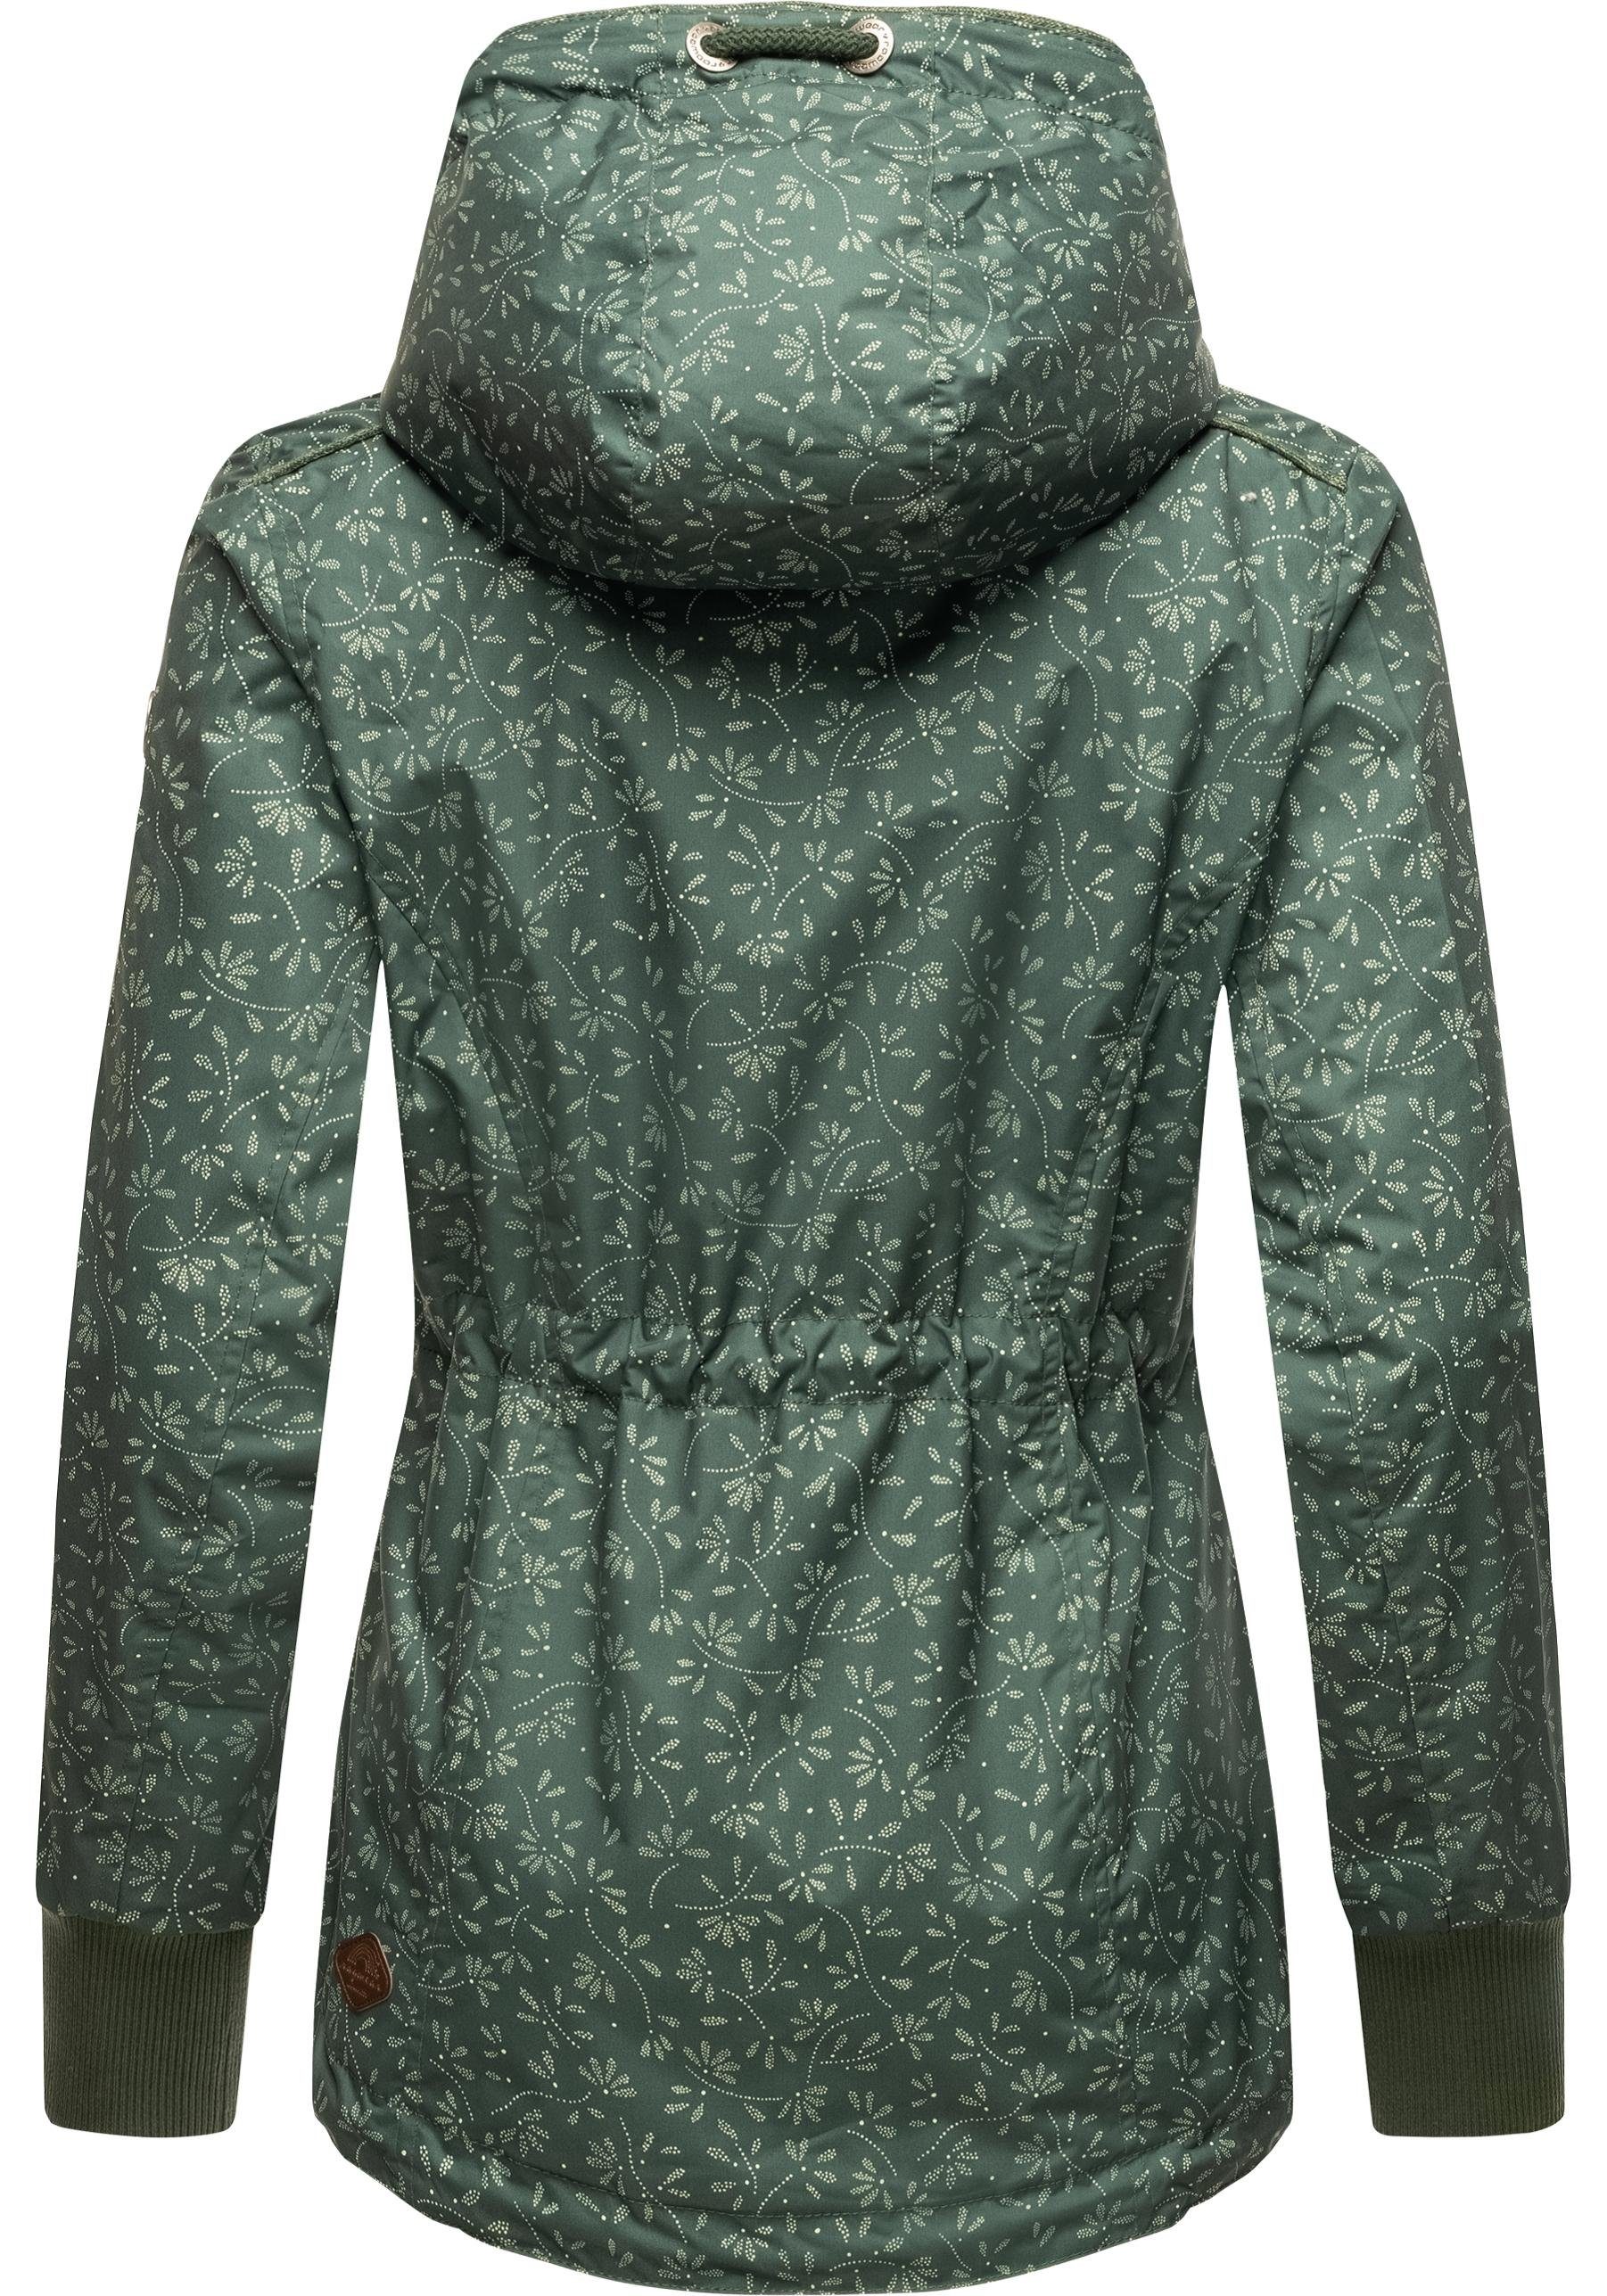 Ragwear Outdoorjacke Danka Kapuze stylische mit Übergangsjacke und Print Bloom dunkelgrün